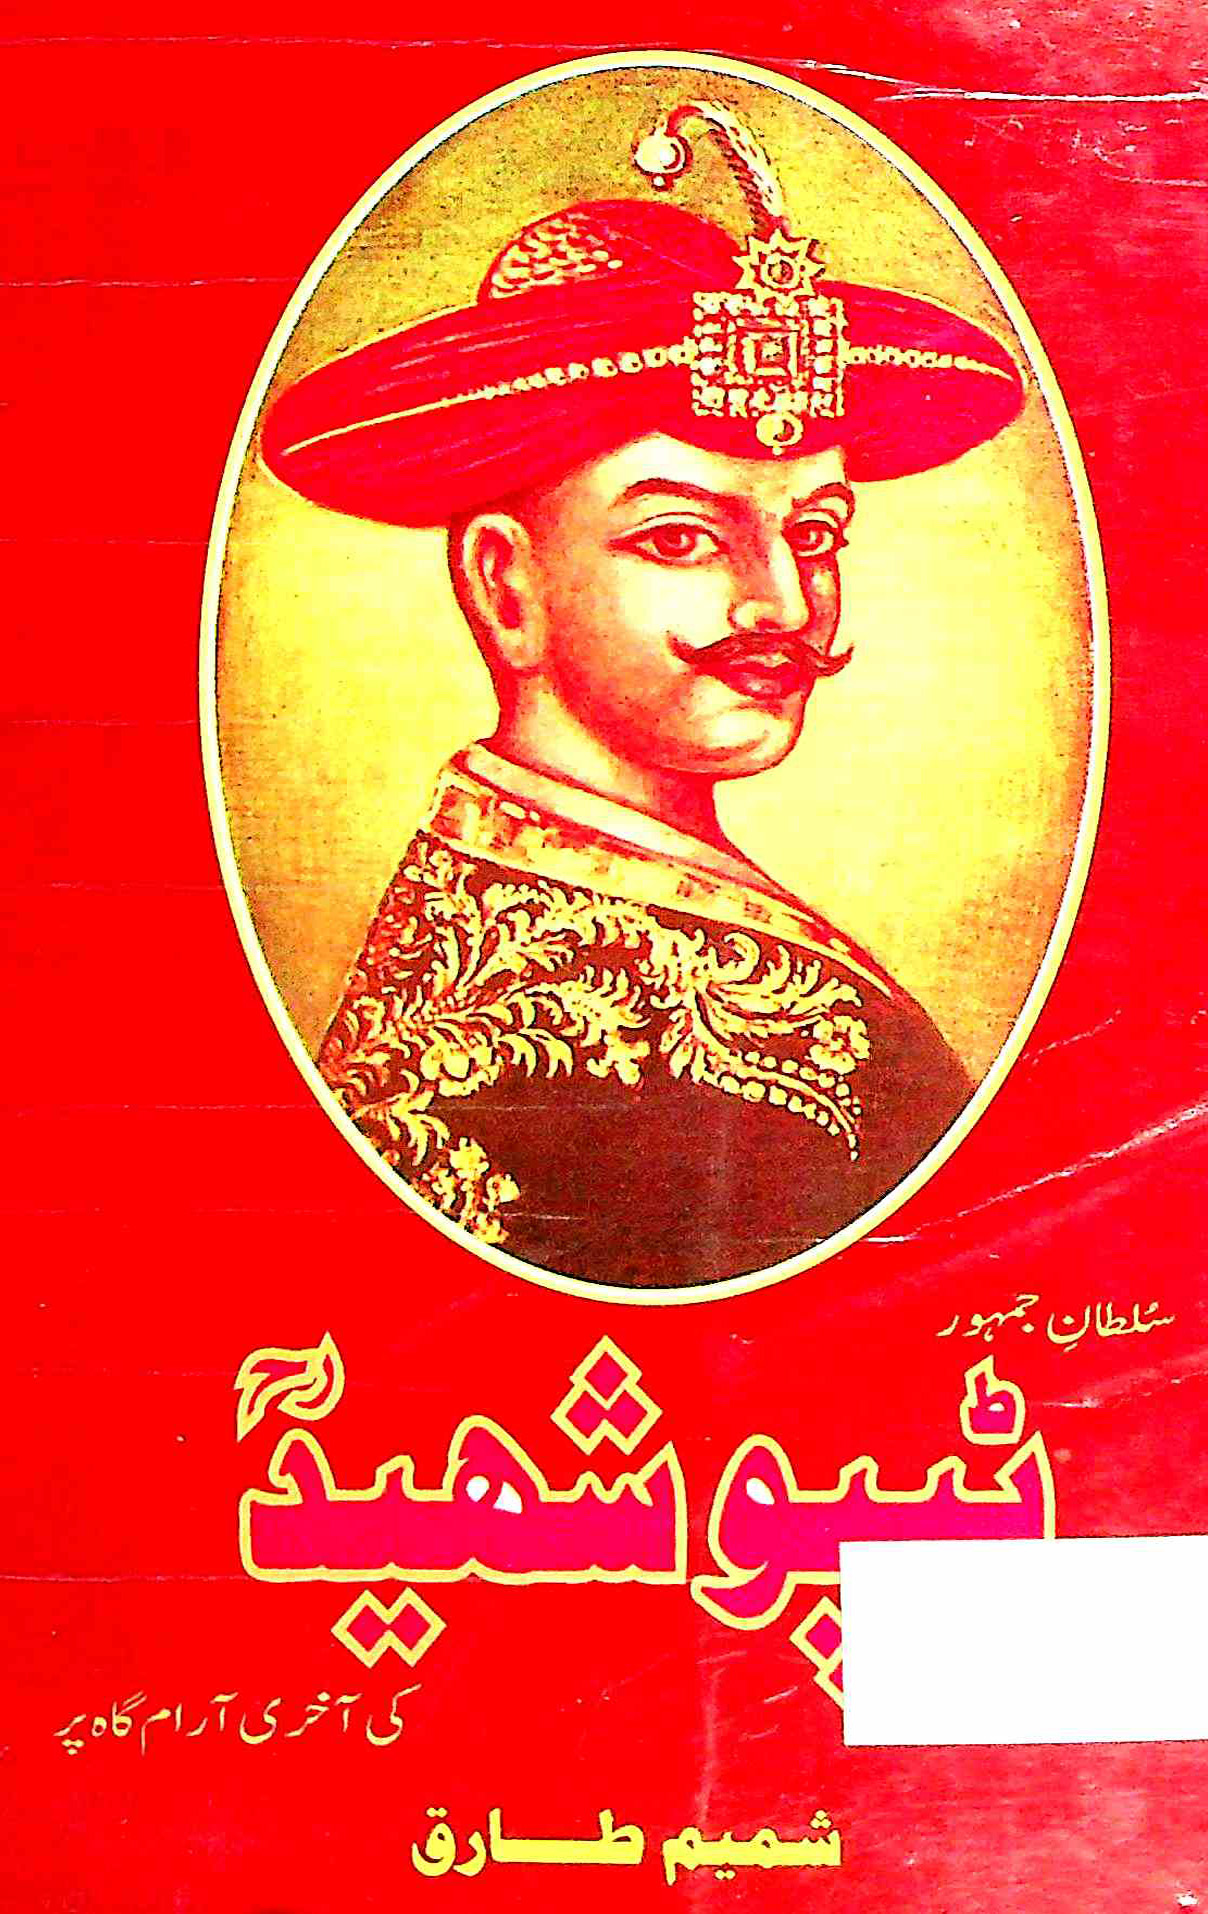 Sultan-e-Jamhoor Tipu Shaheed Ki Akhri Aramgah Par